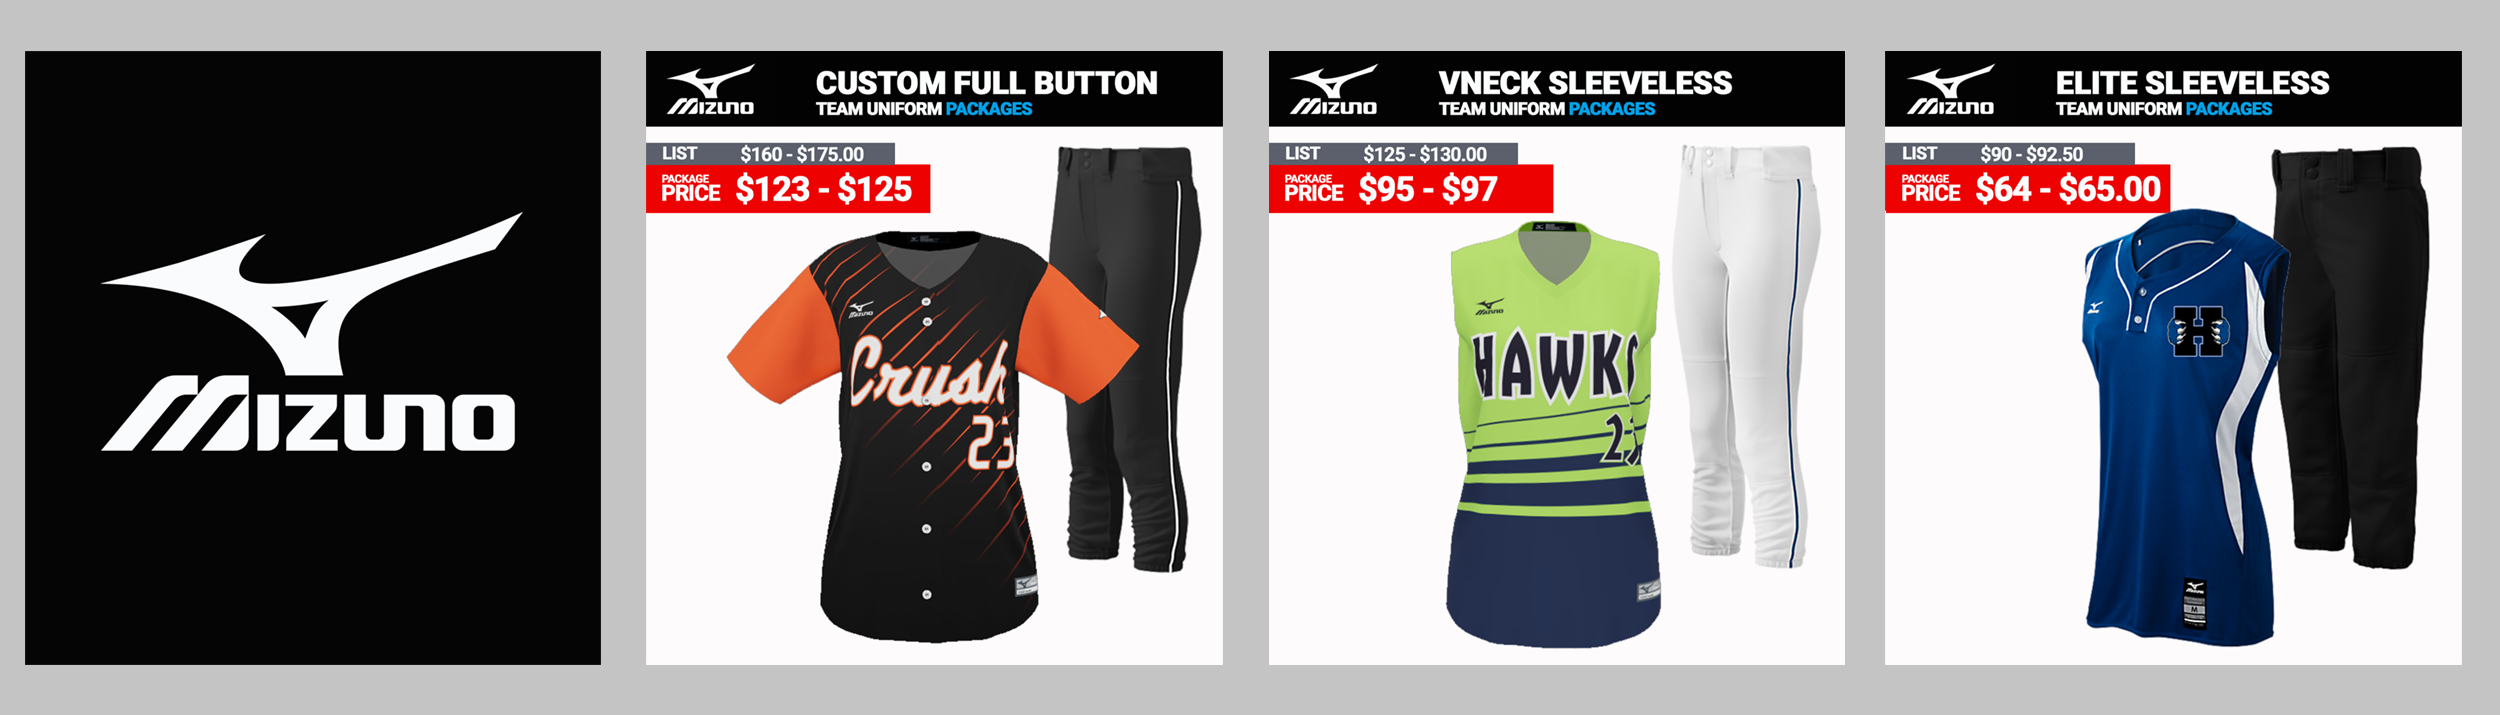 fastpitch softball team uniform packages